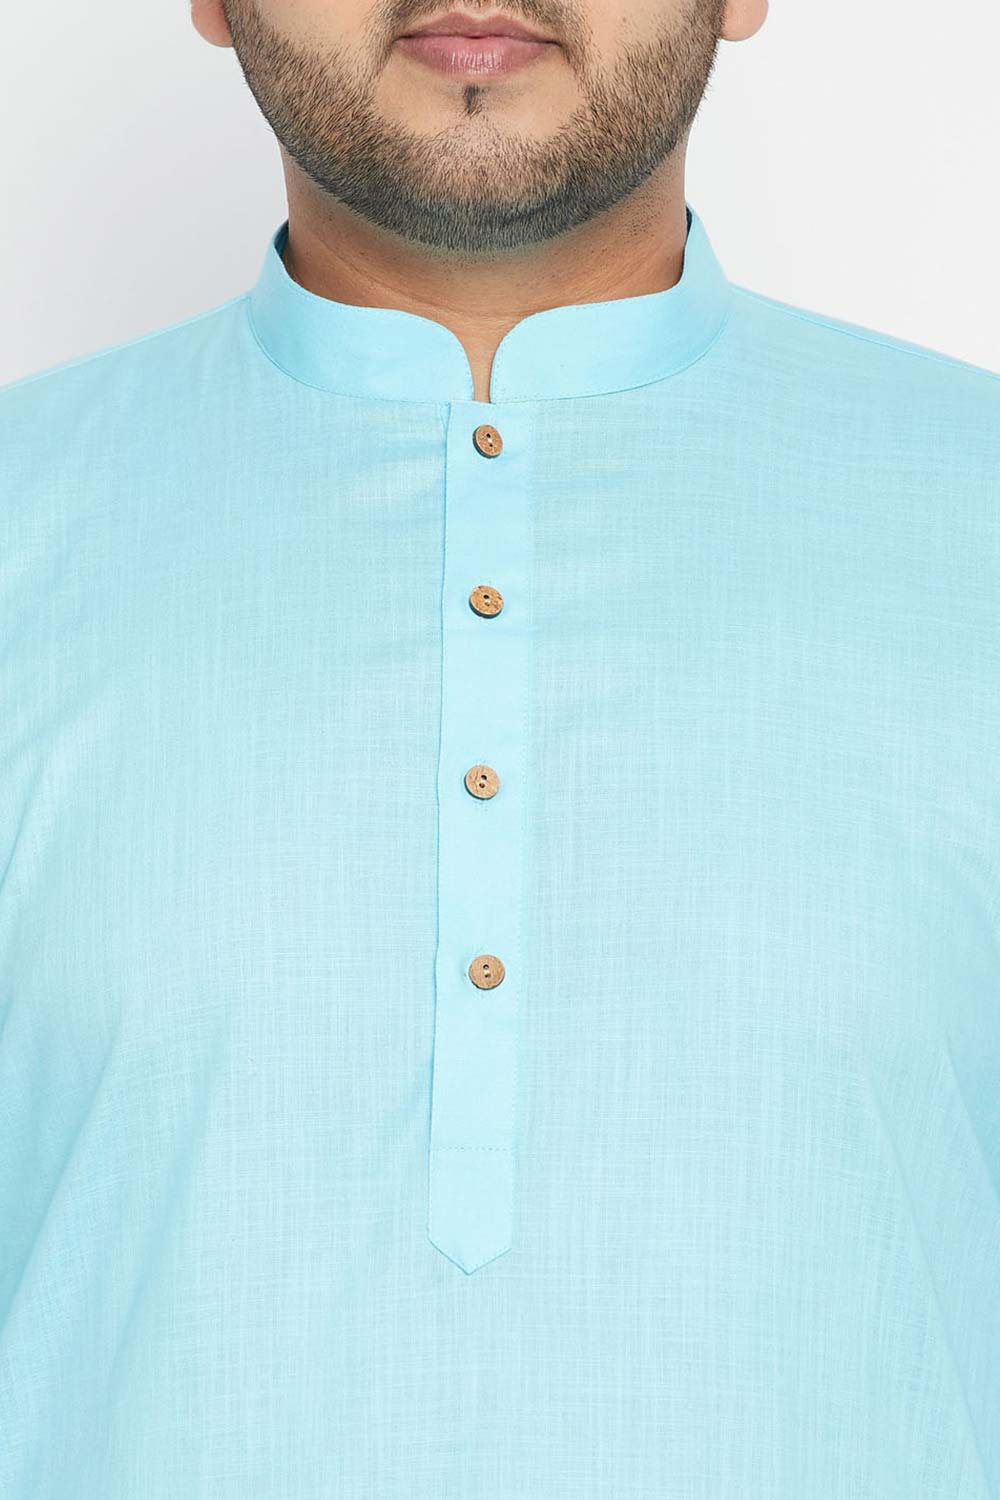 Buy Men's Cotton Blend Solid Kurta Set in Aqua Blue - Zoom Out